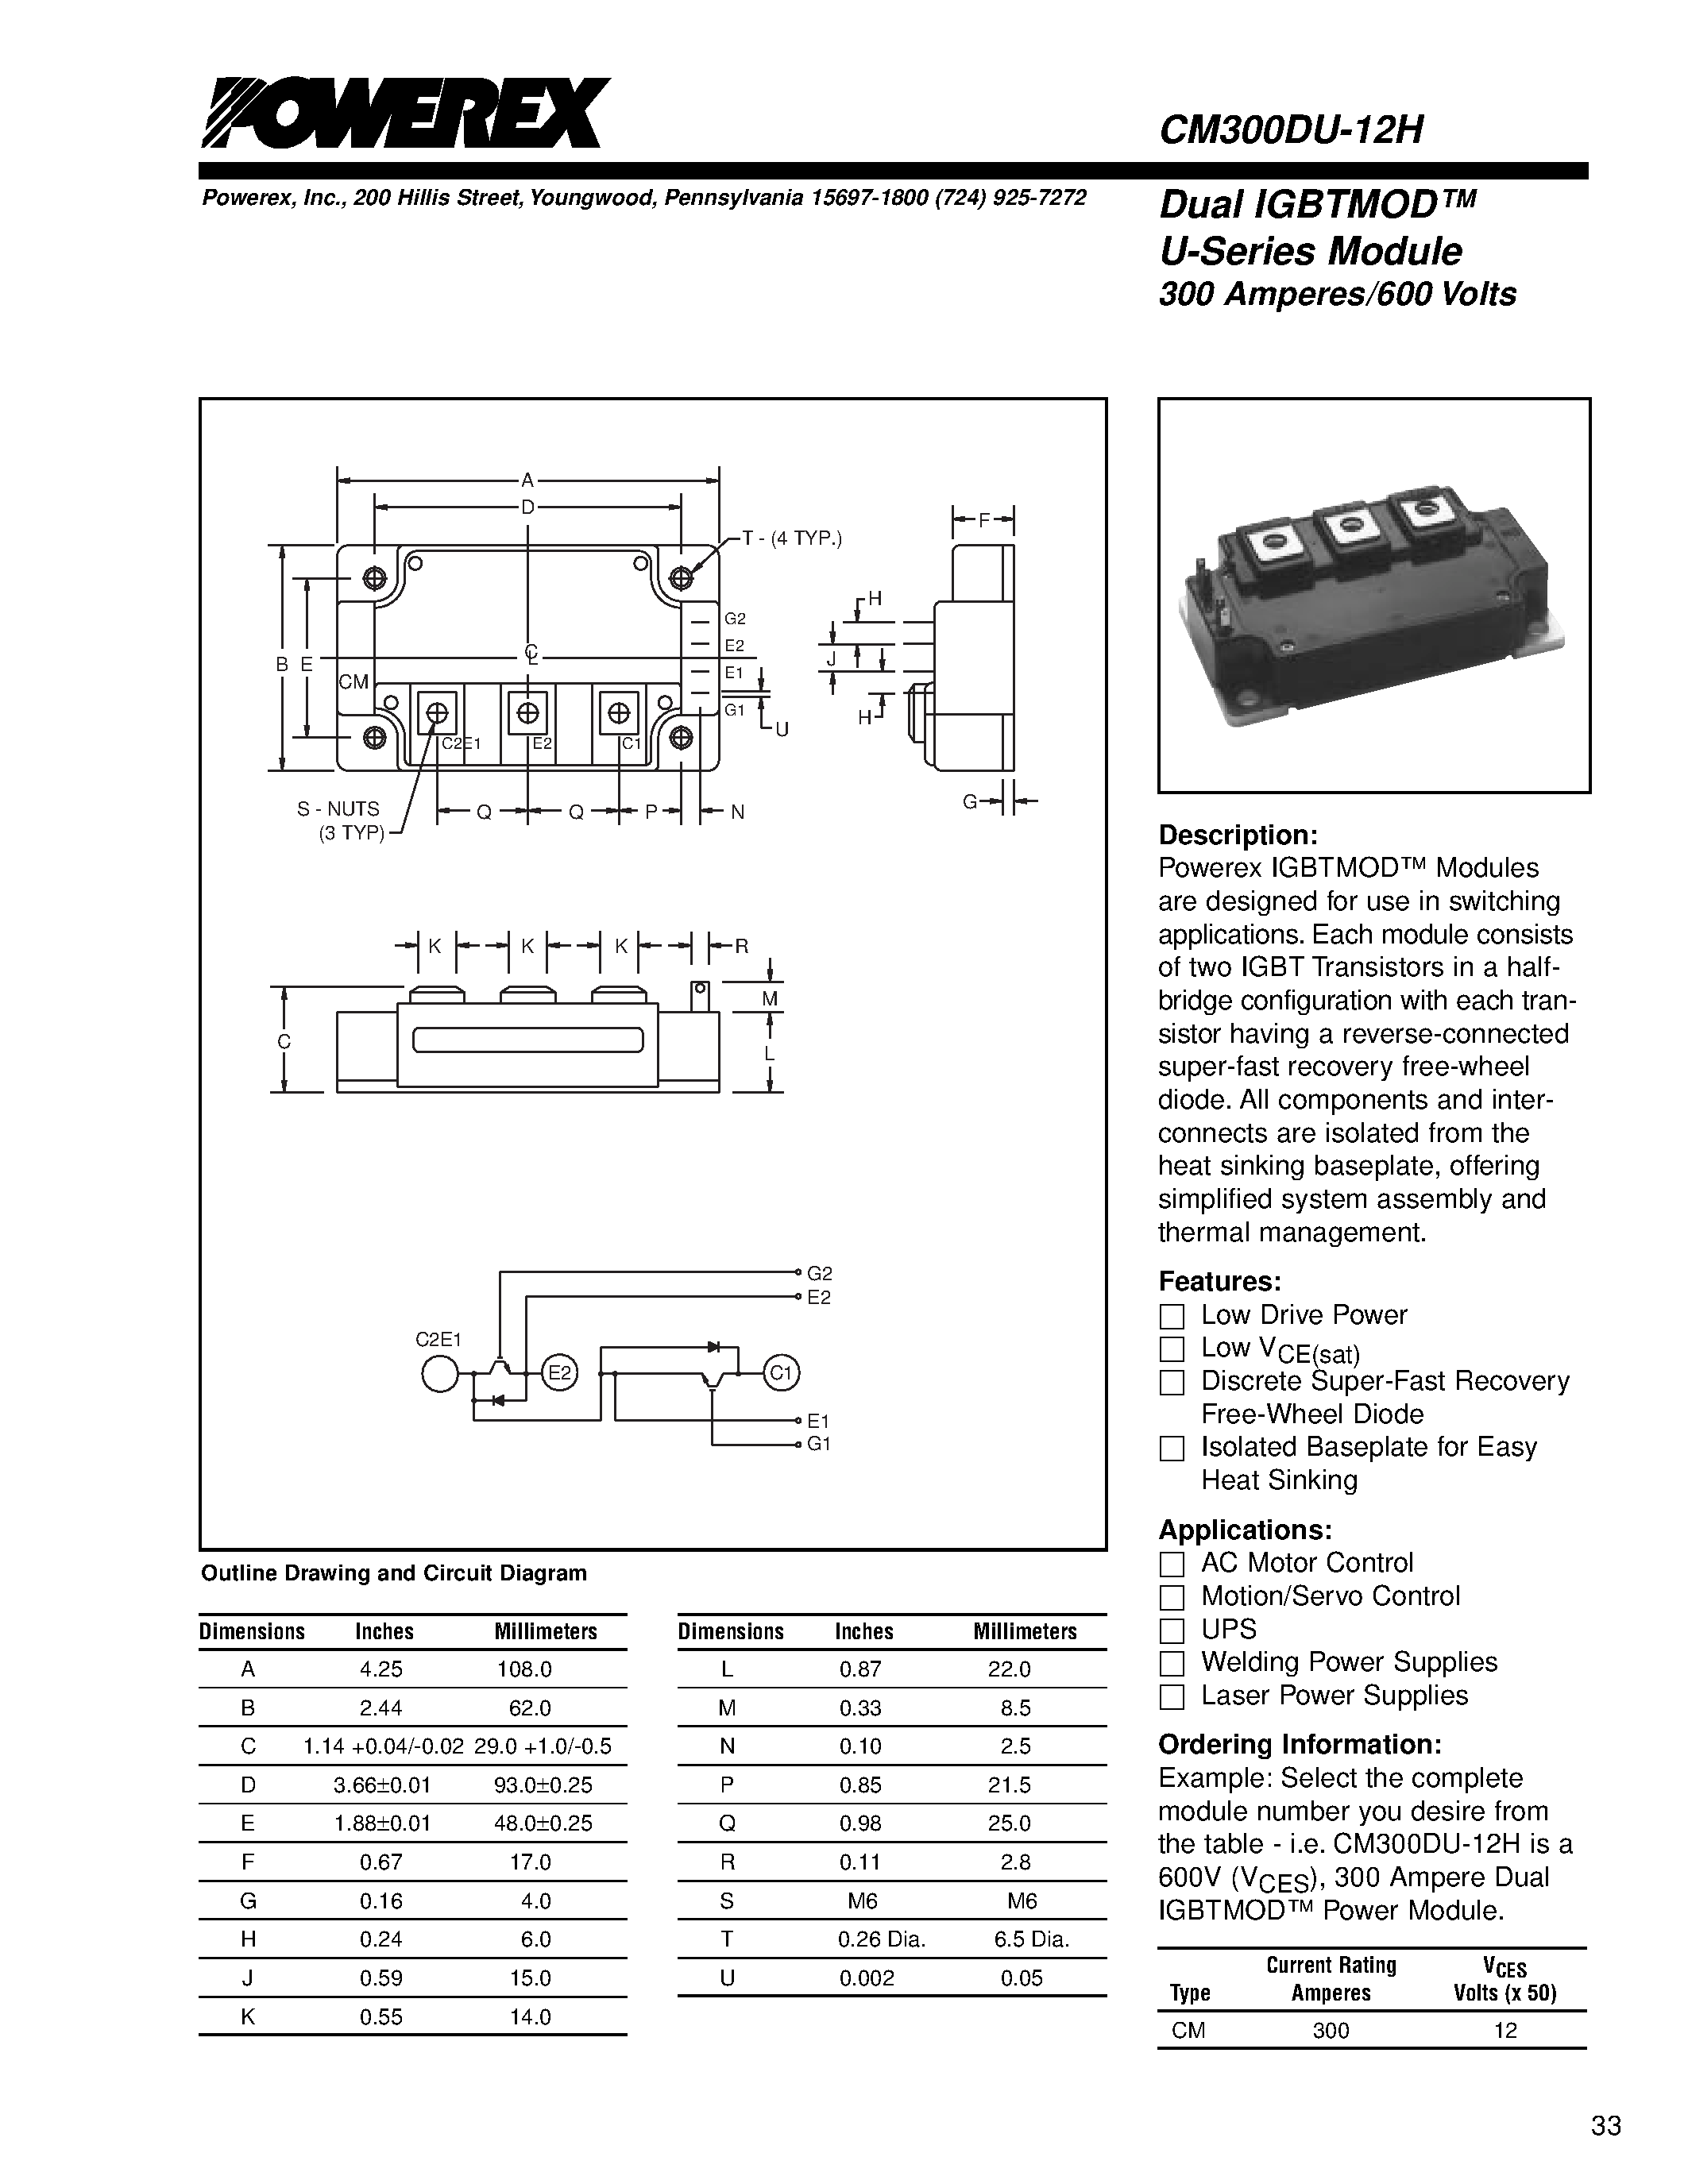 Даташит CM300DU-12H - Dual IGBTMOD U-Series Module 300 Amperes/600 Volts страница 1